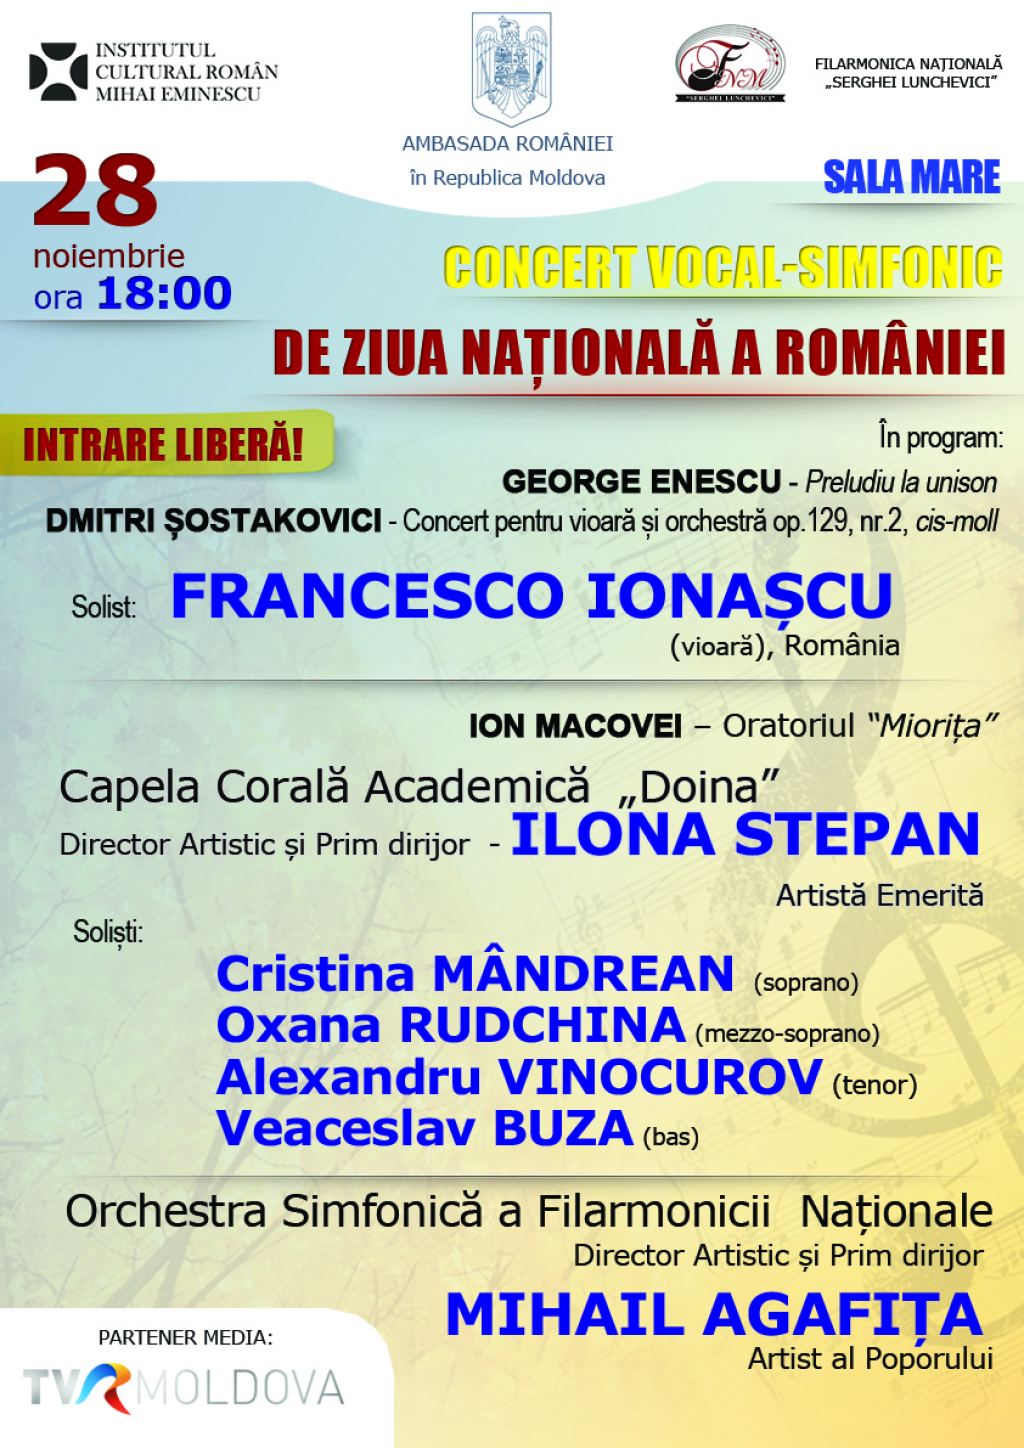 Concert de Ziua Nationala a Romaniei, la Filarmonica Nationala Serghei Lunchievici din Chisinau